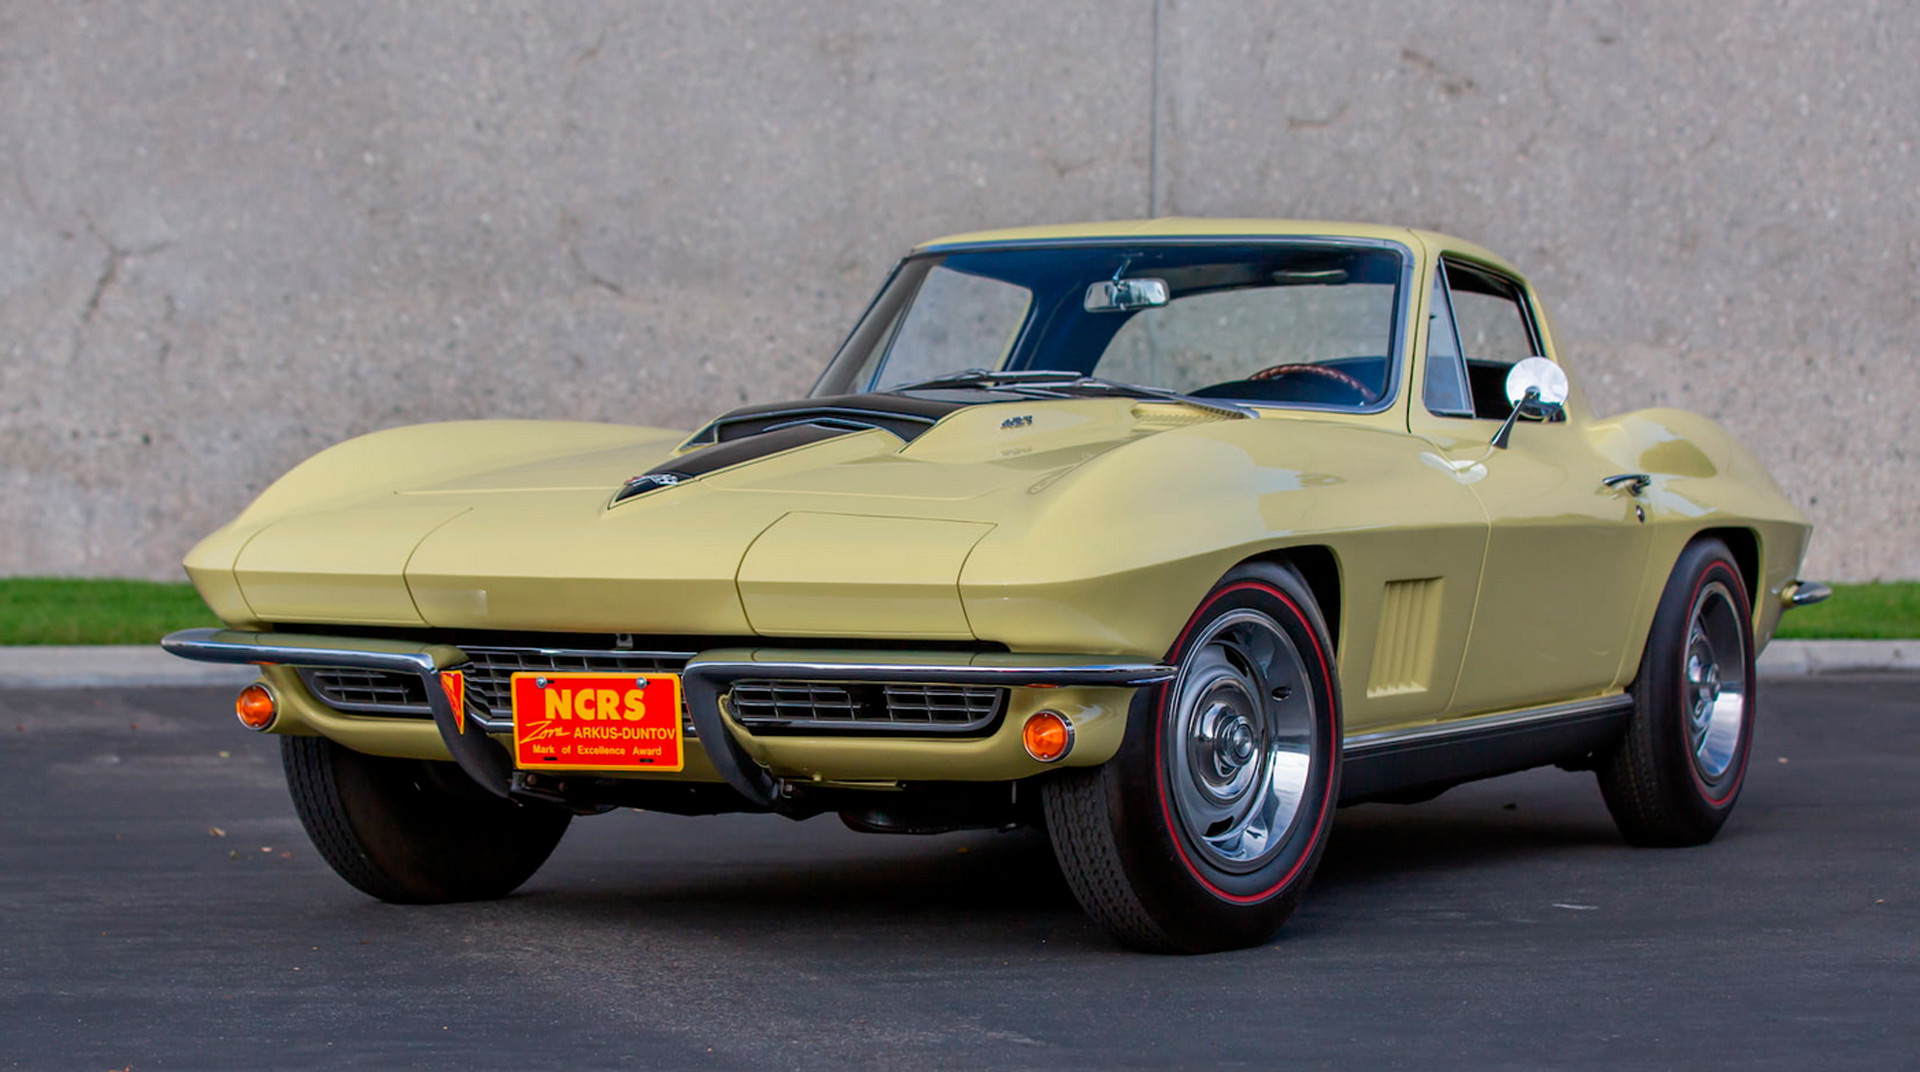 Corvette Of The Day: 1967 Chevrolet Corvette Sting Ray L88